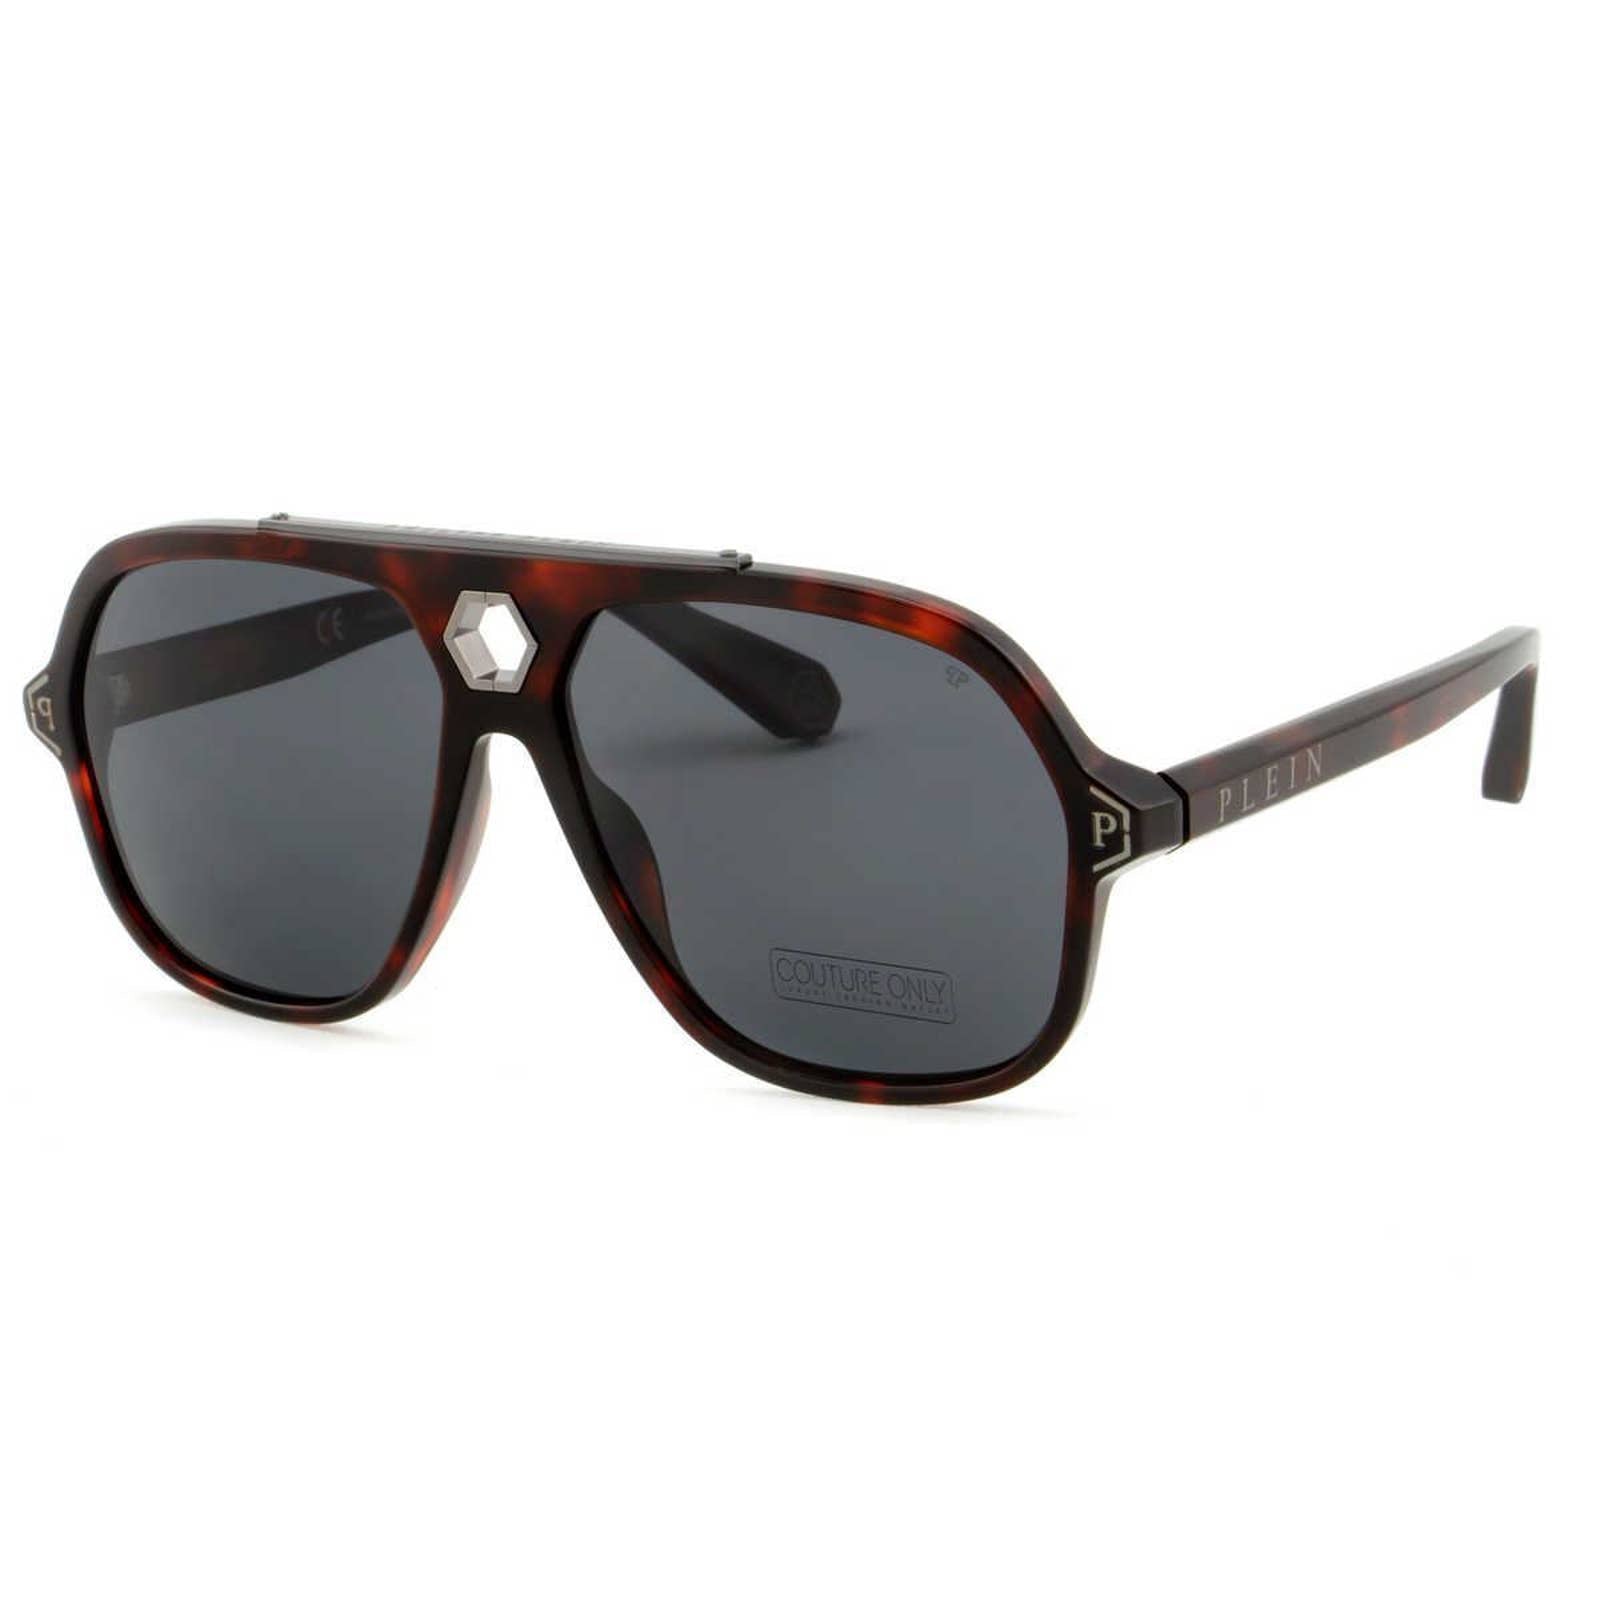 Men Square Sunglasses SPP004M-9ATP Havana Brown & Gray Lens